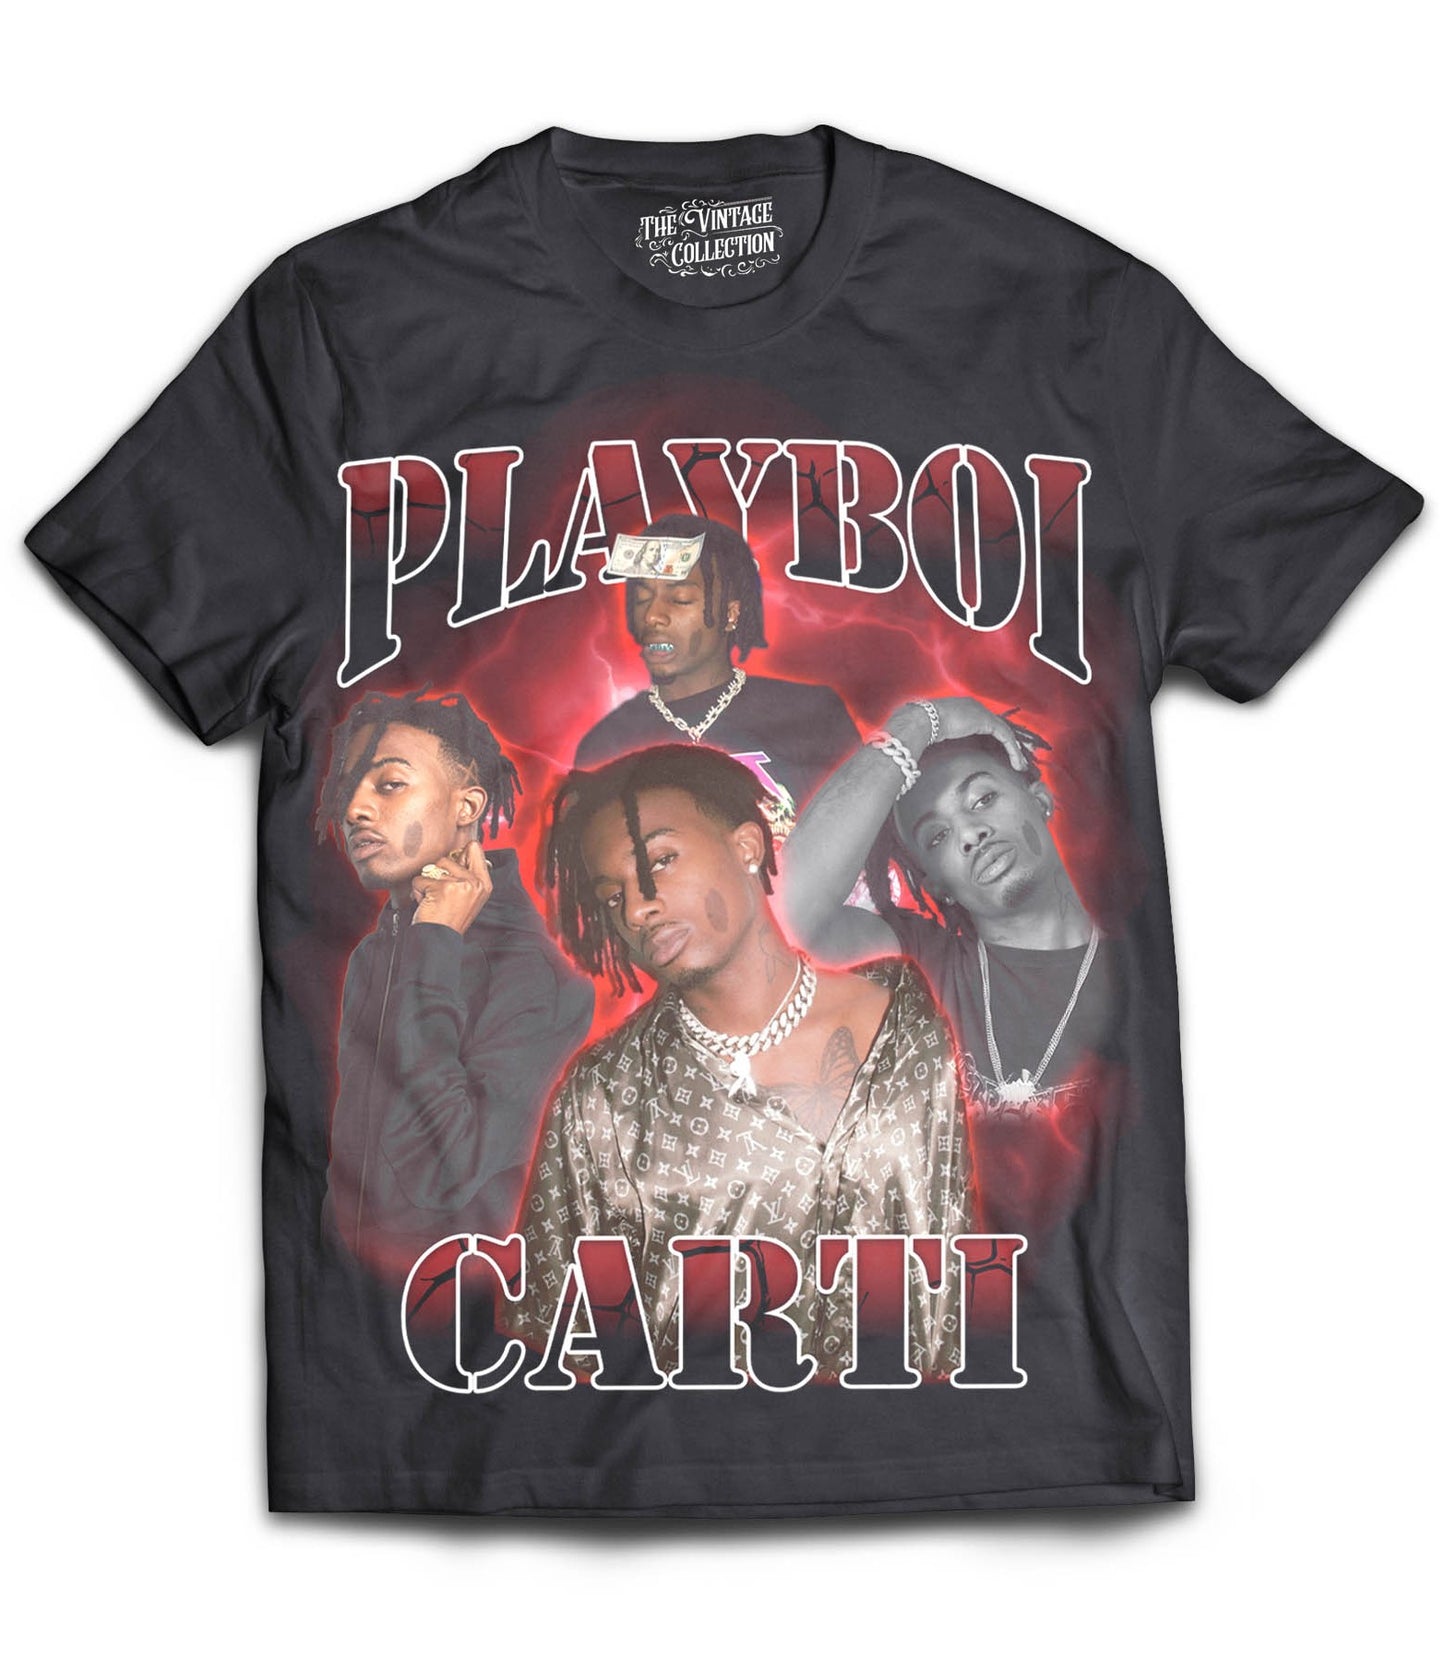 Playboi Carti Tribute Shirt (Black)